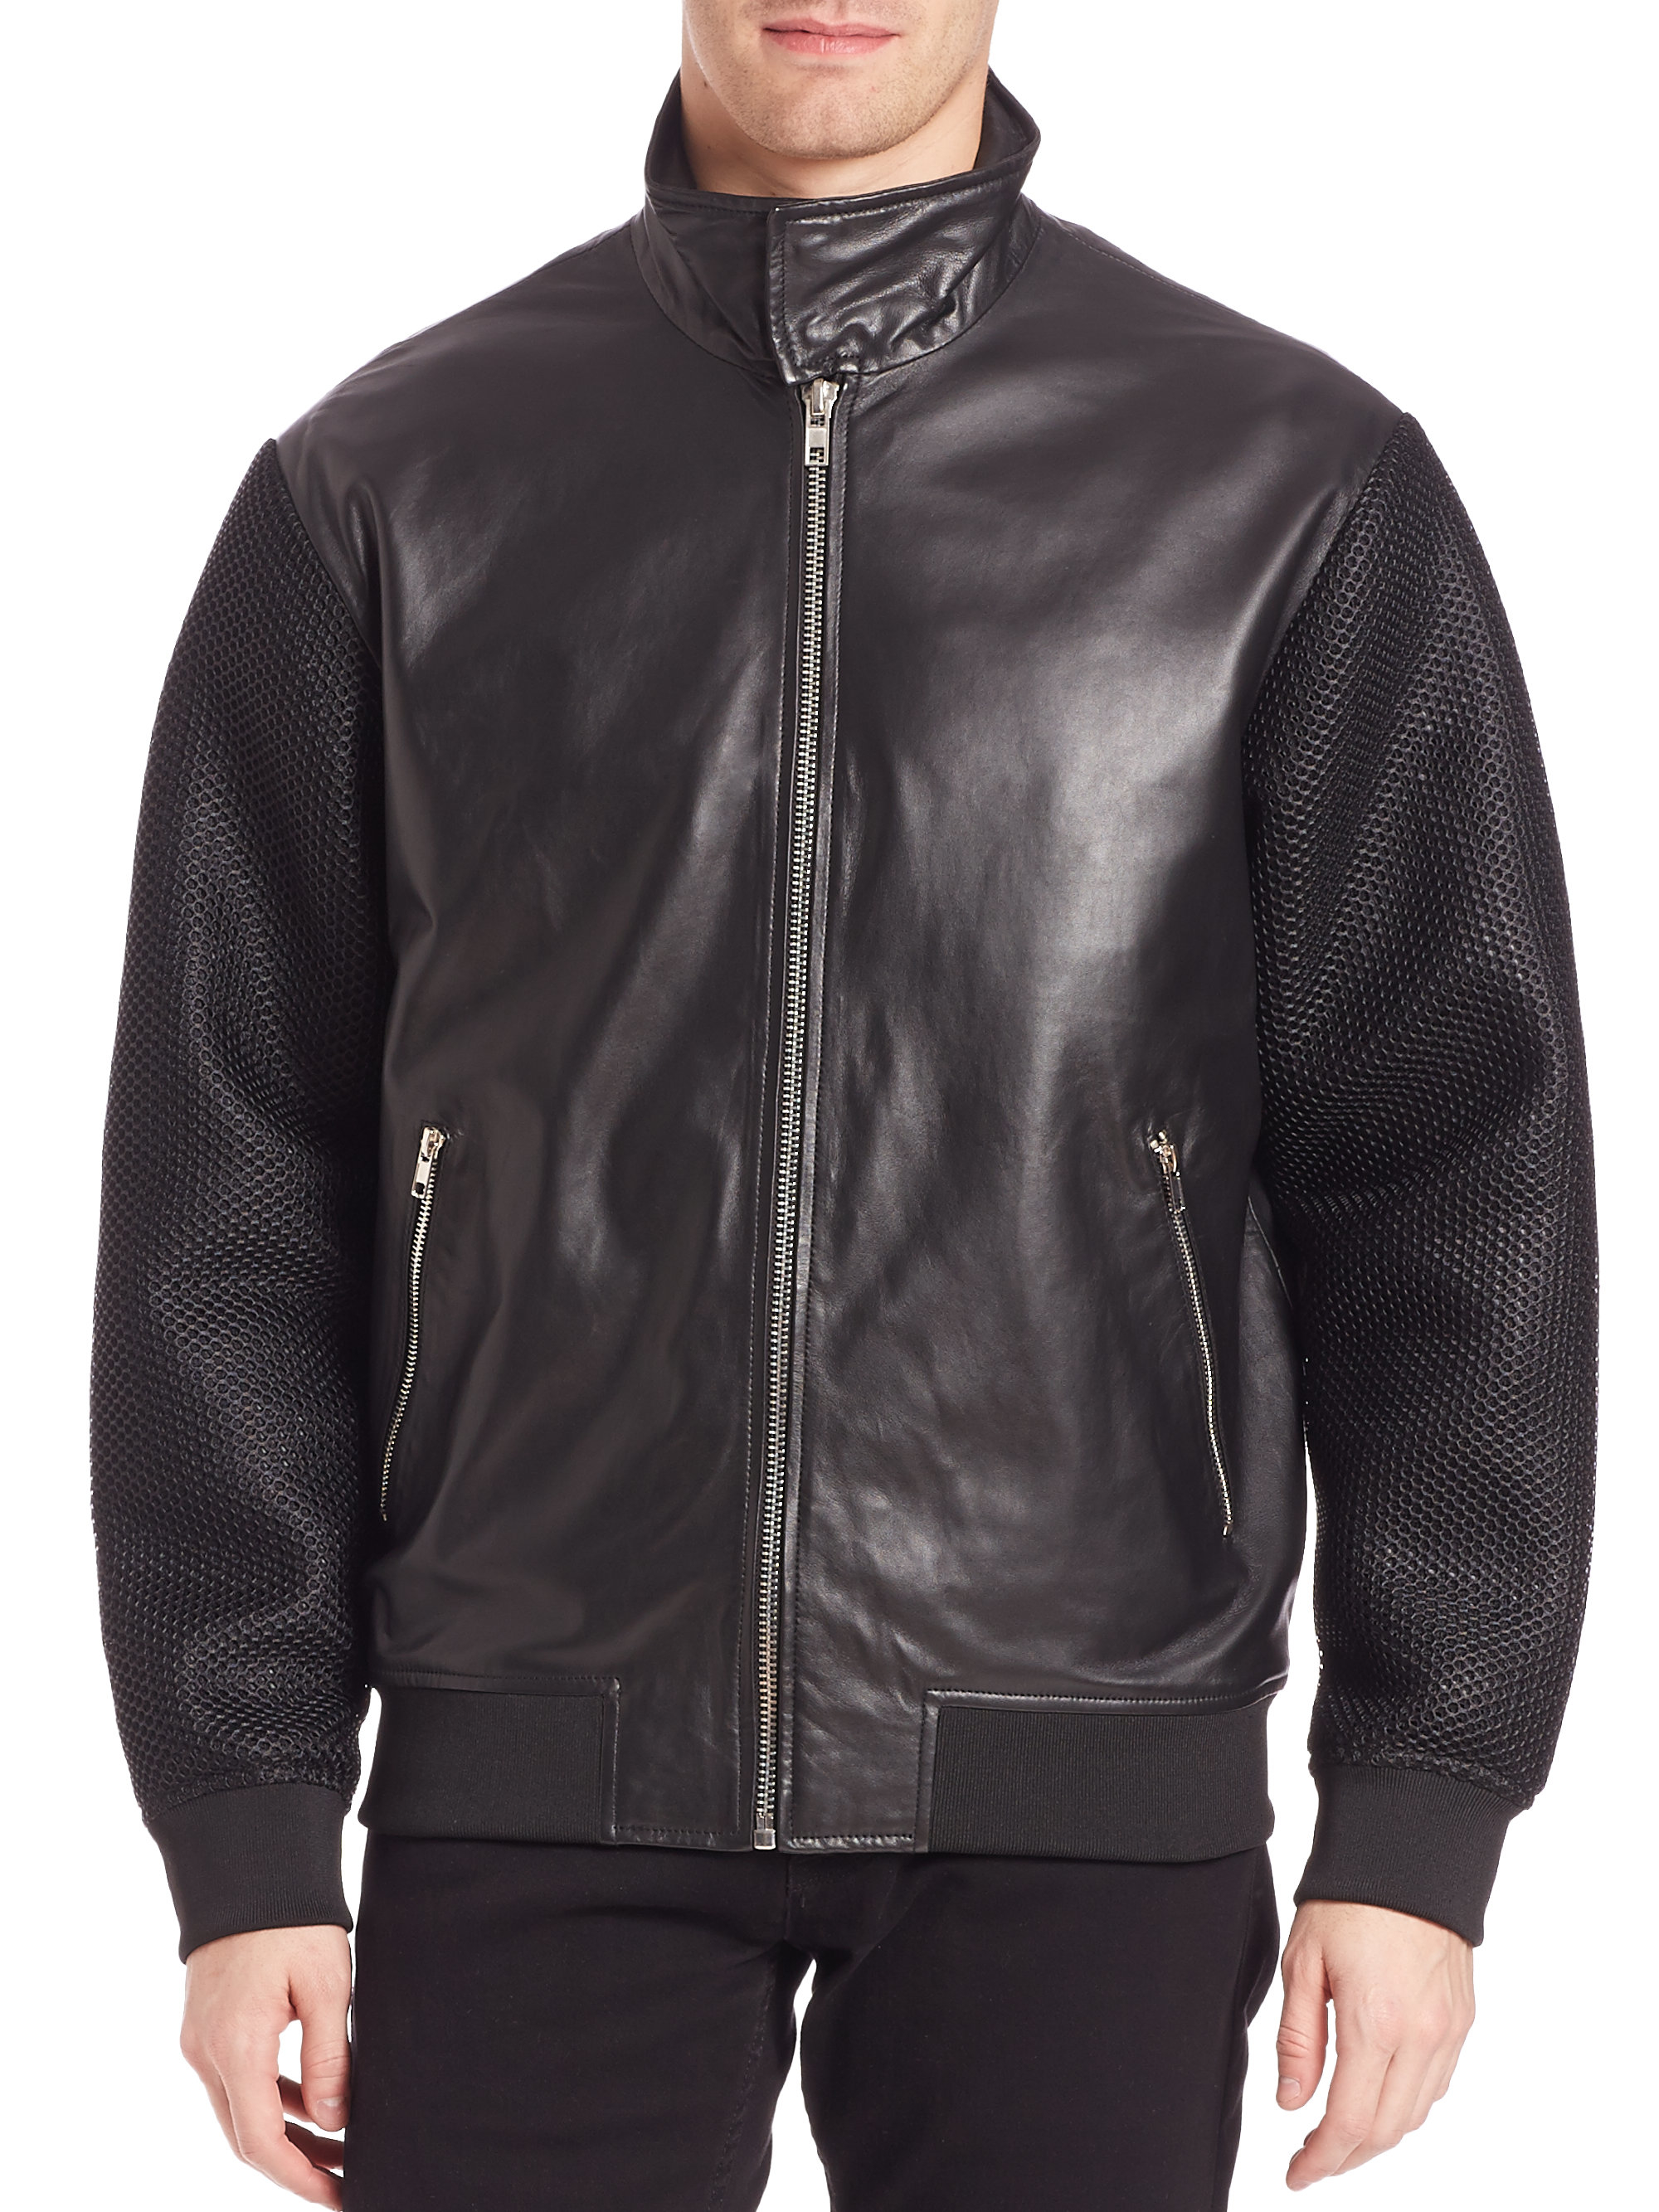 Lyst - Mcq Harrington Leather Jacket in Black for Men